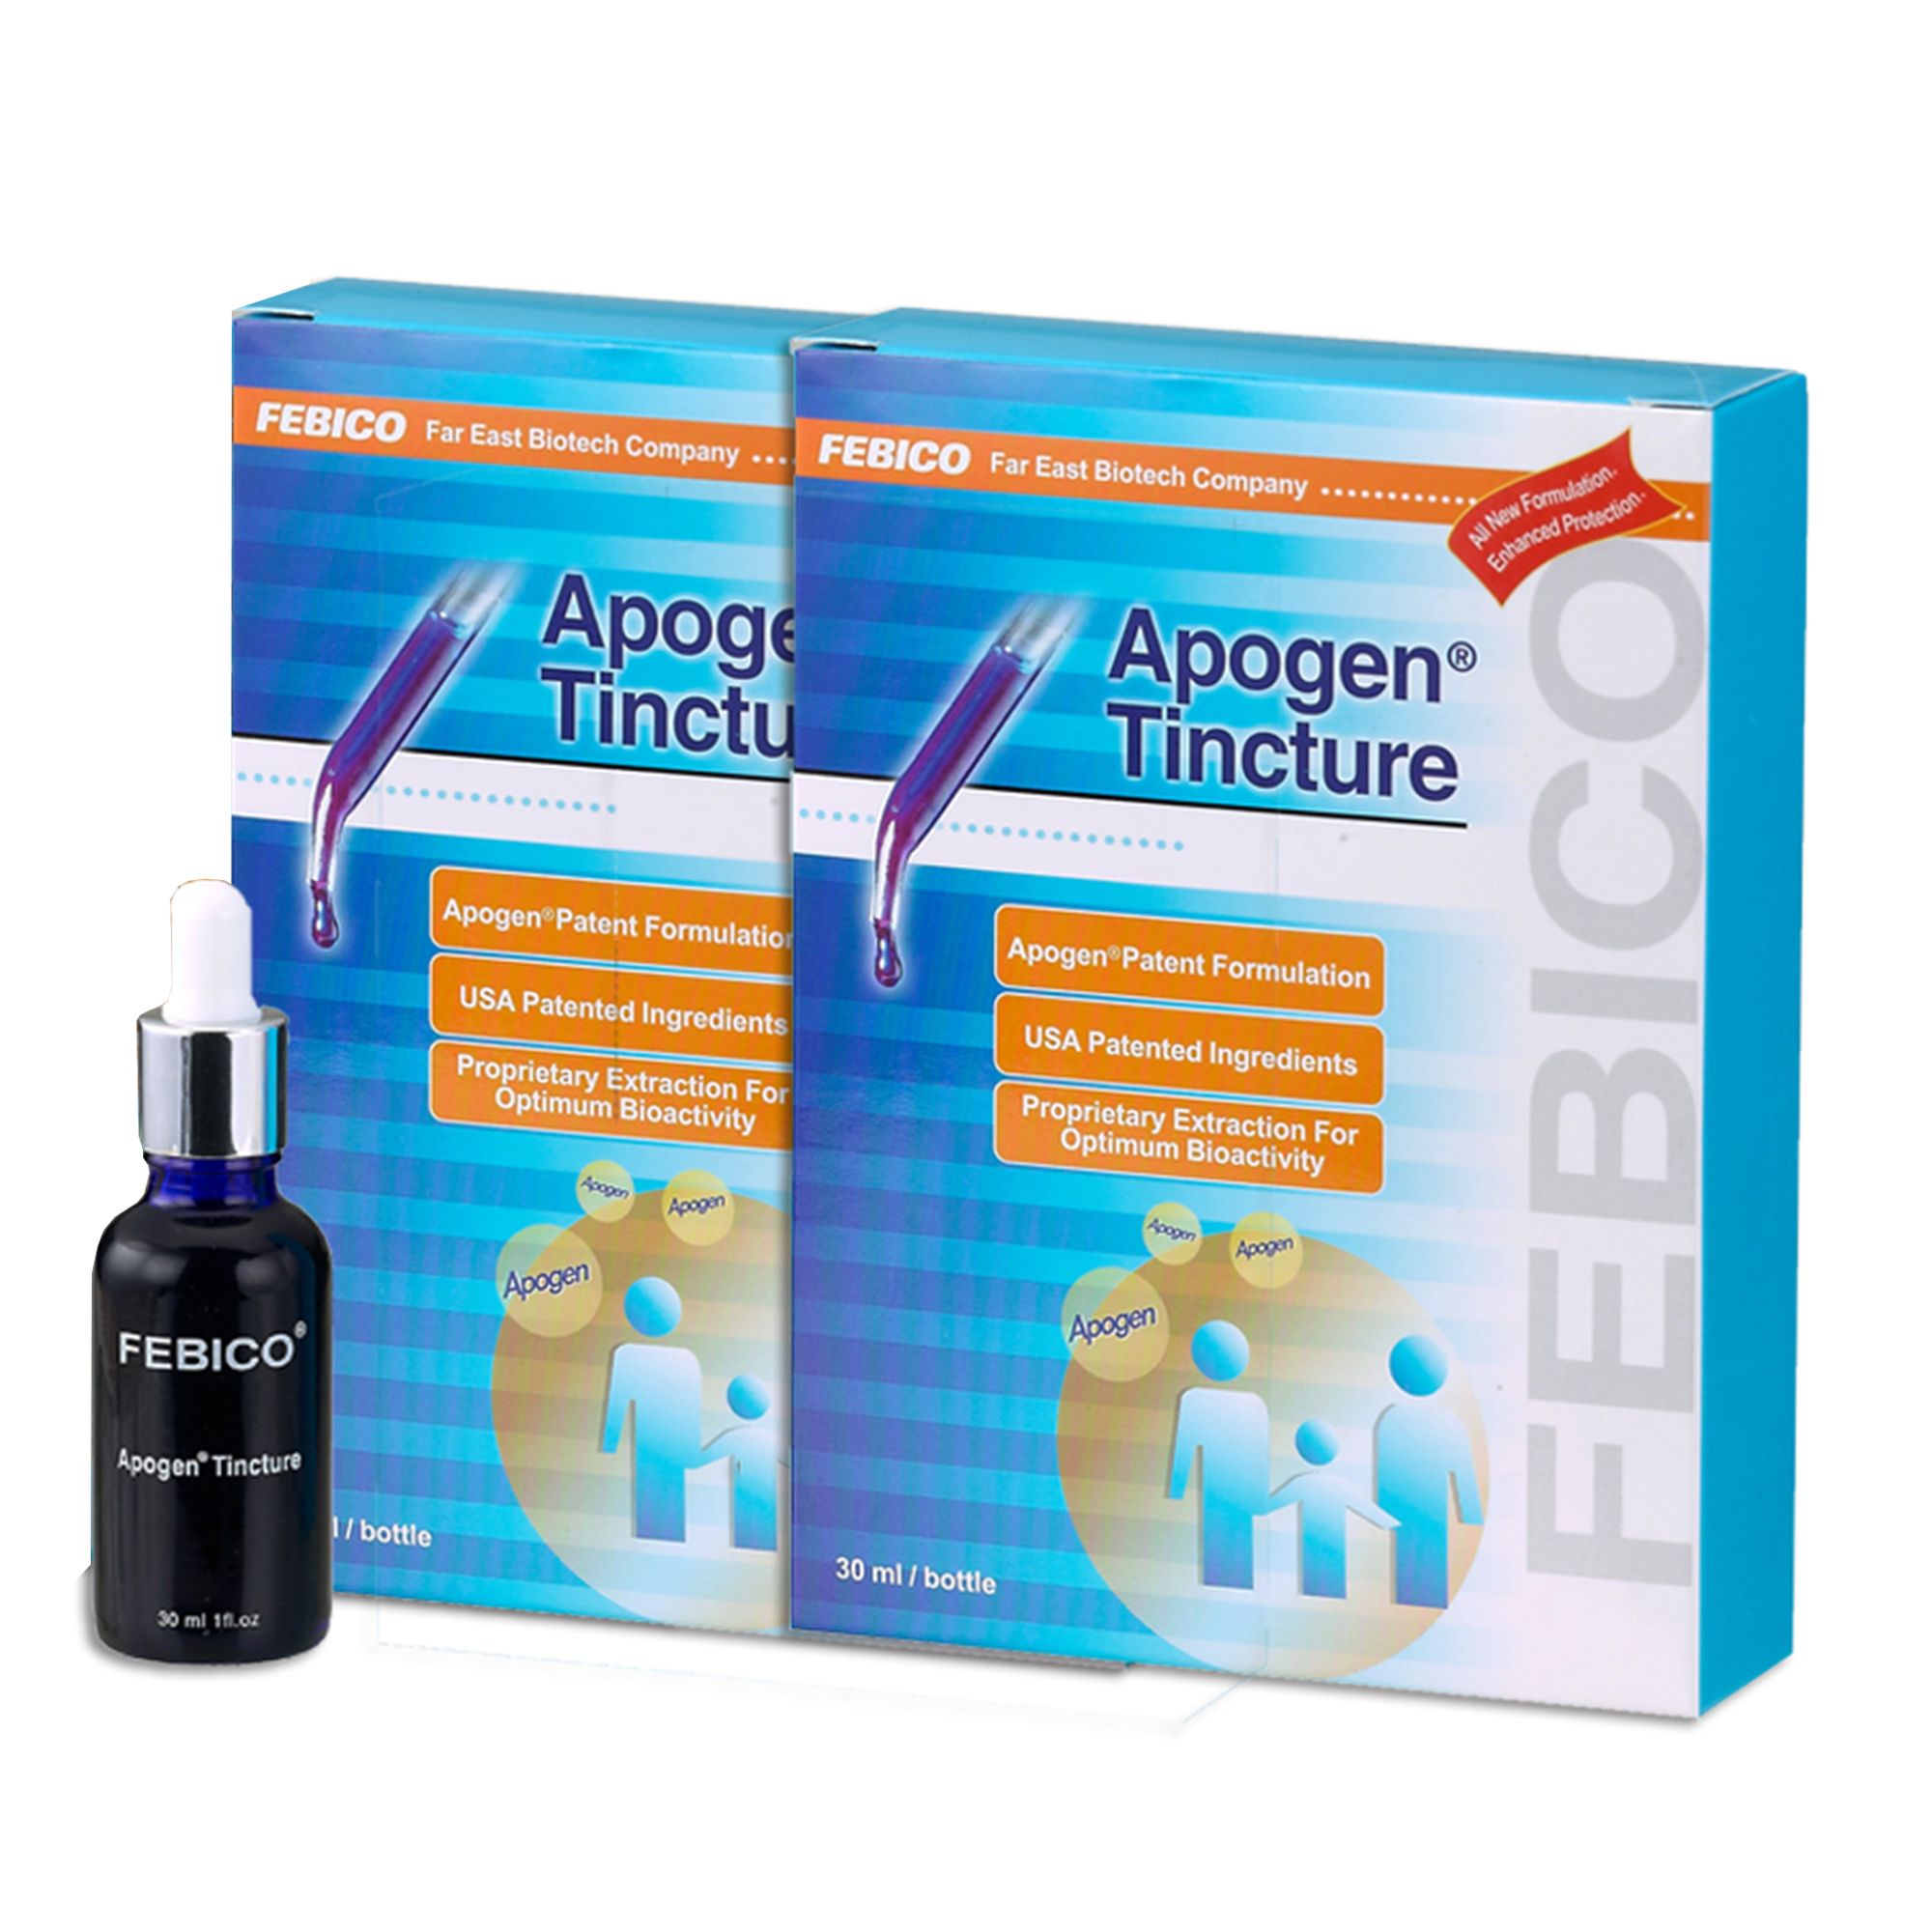 Apogen® Immune Booster